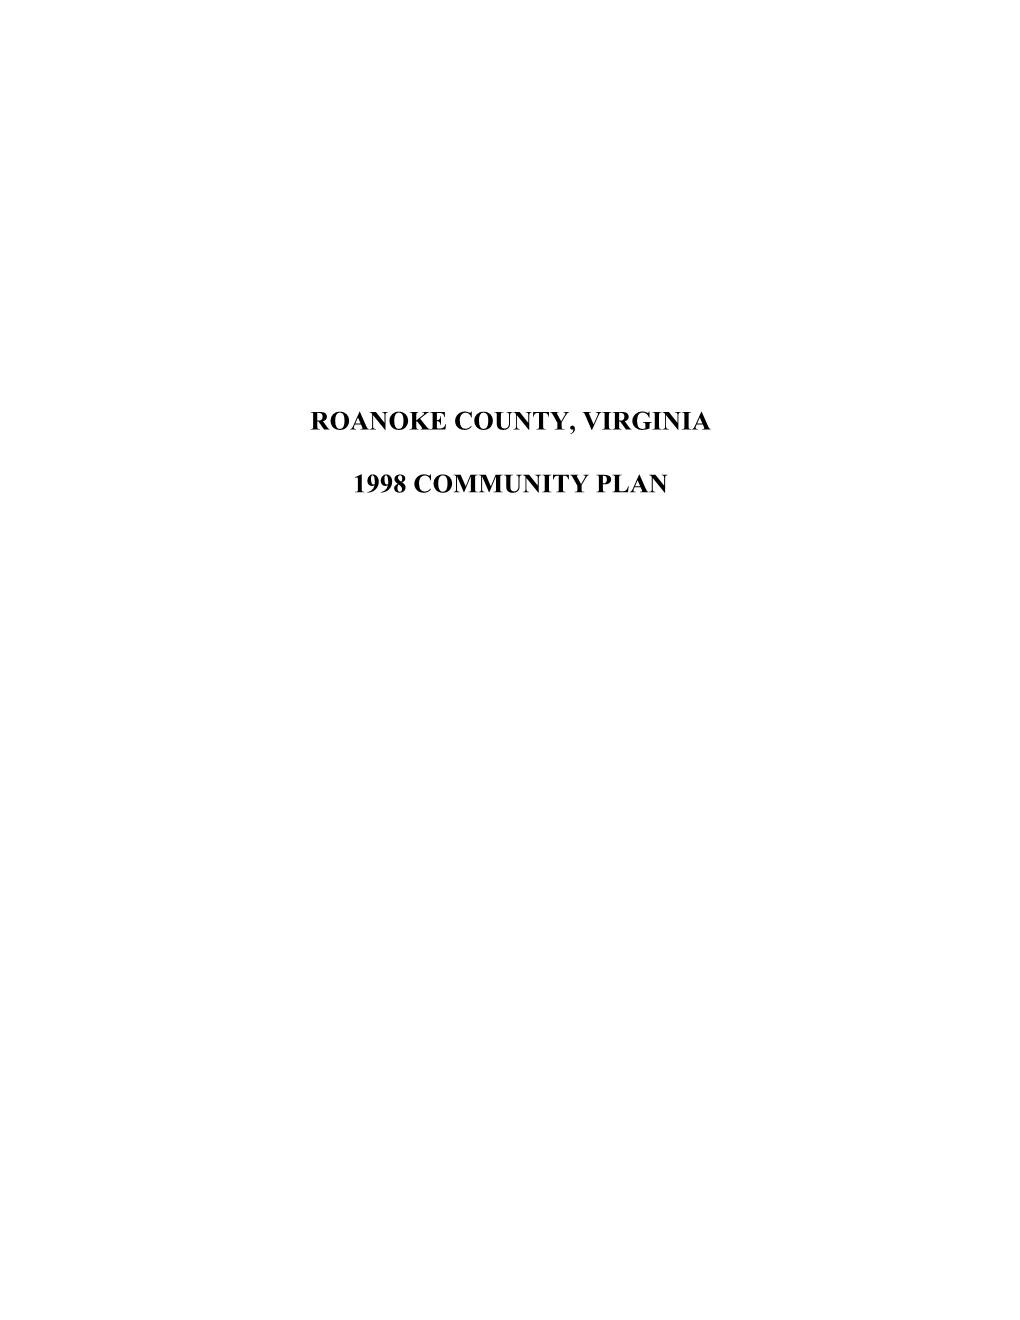 Roanoke County, Virginia 1998 Community Plan